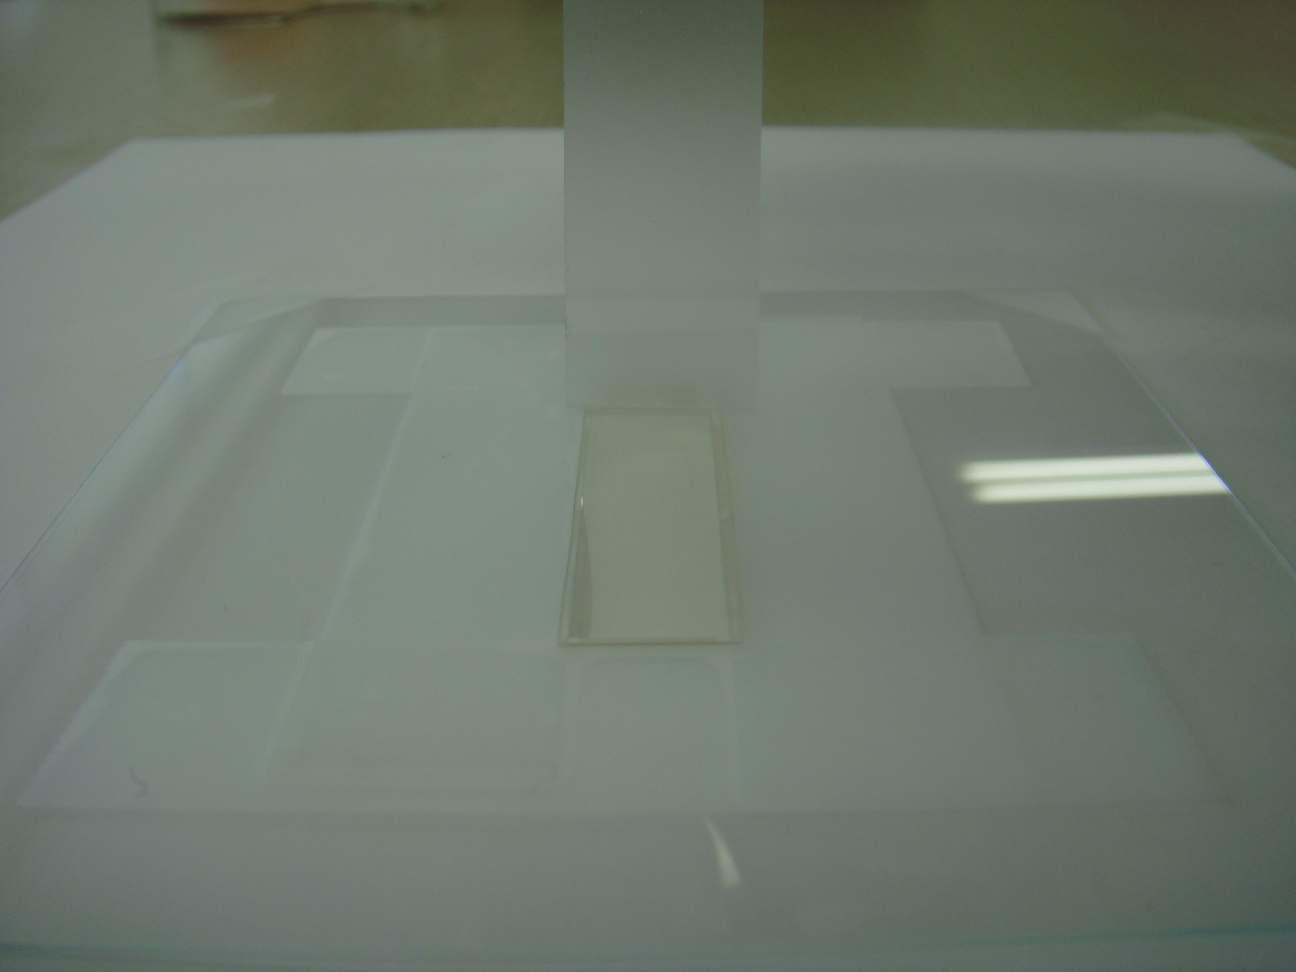 RF magnetron sputtering 시스템을 이용하여, 실제 제작된 ZITO 박막의 tape test 부착력 시험 결과.